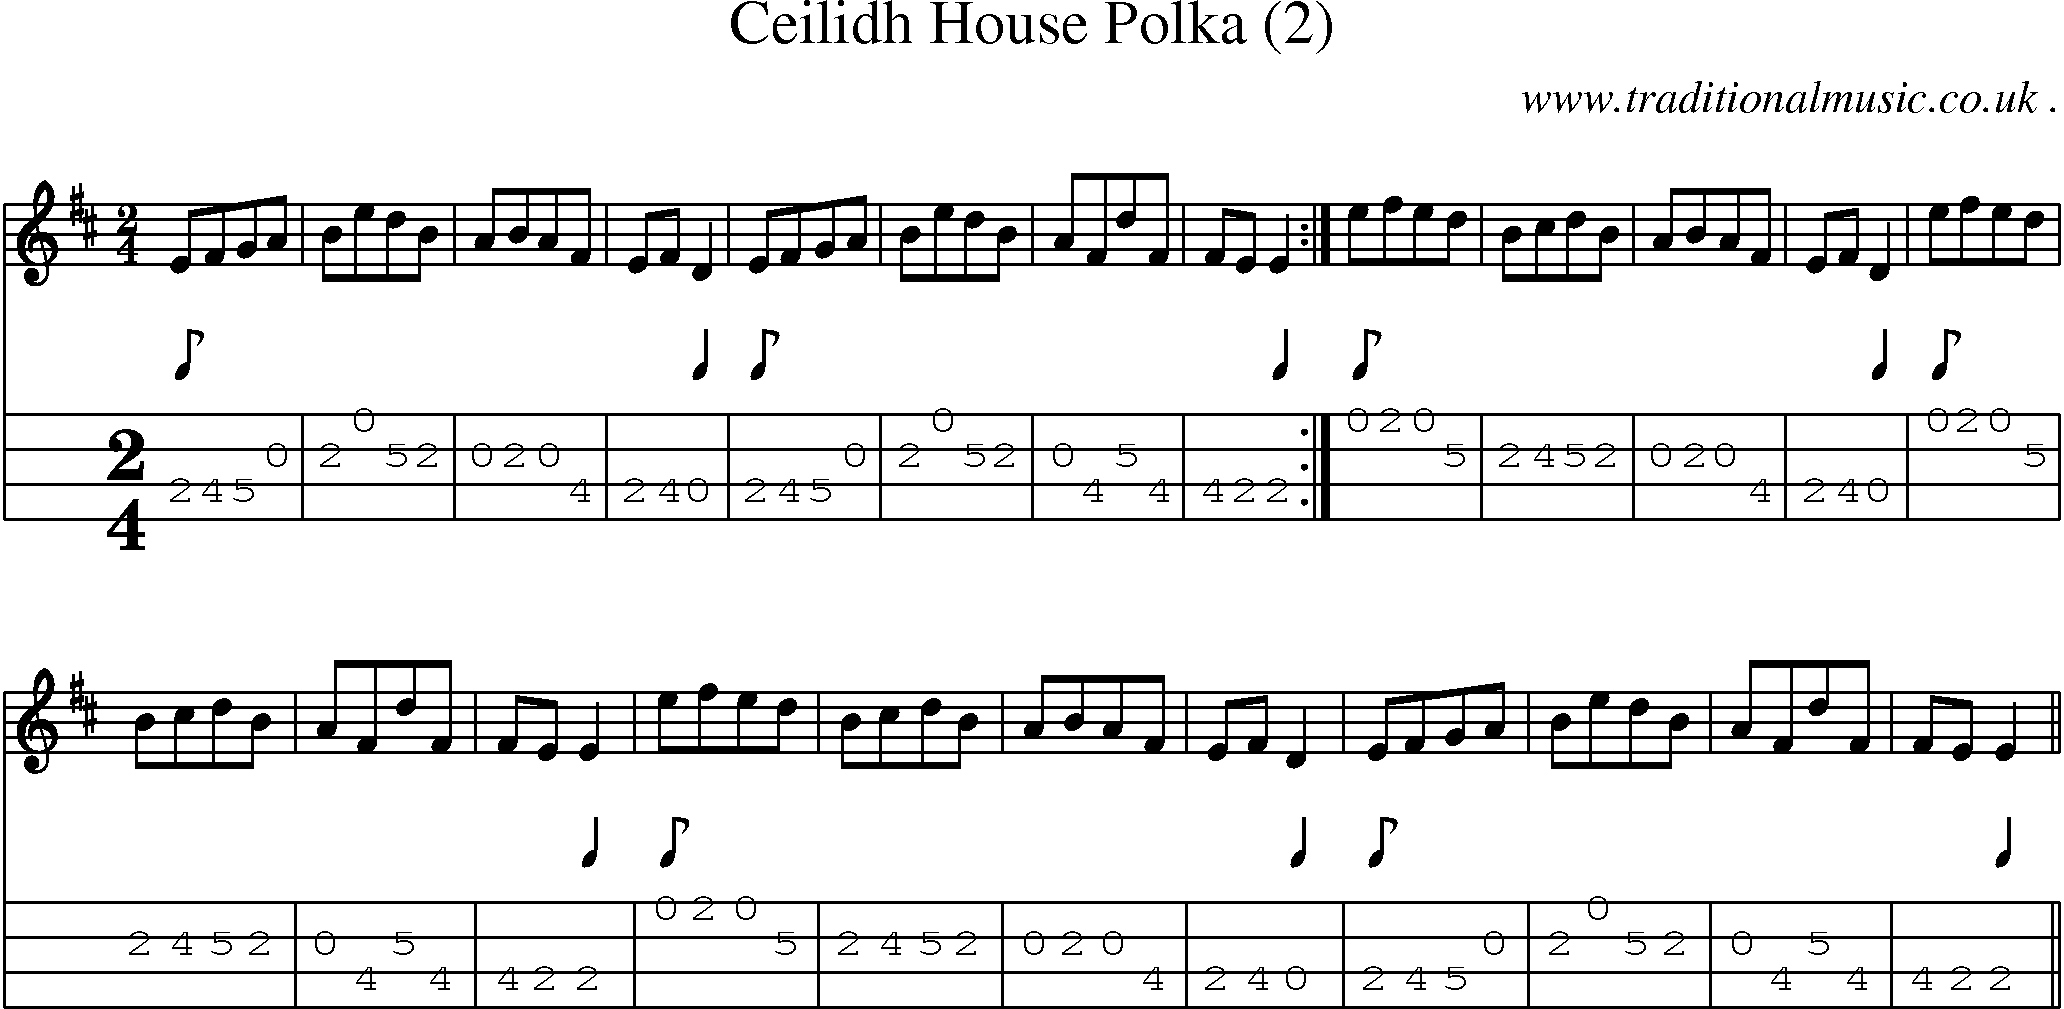 Sheet-Music and Mandolin Tabs for Ceilidh House Polka (2)